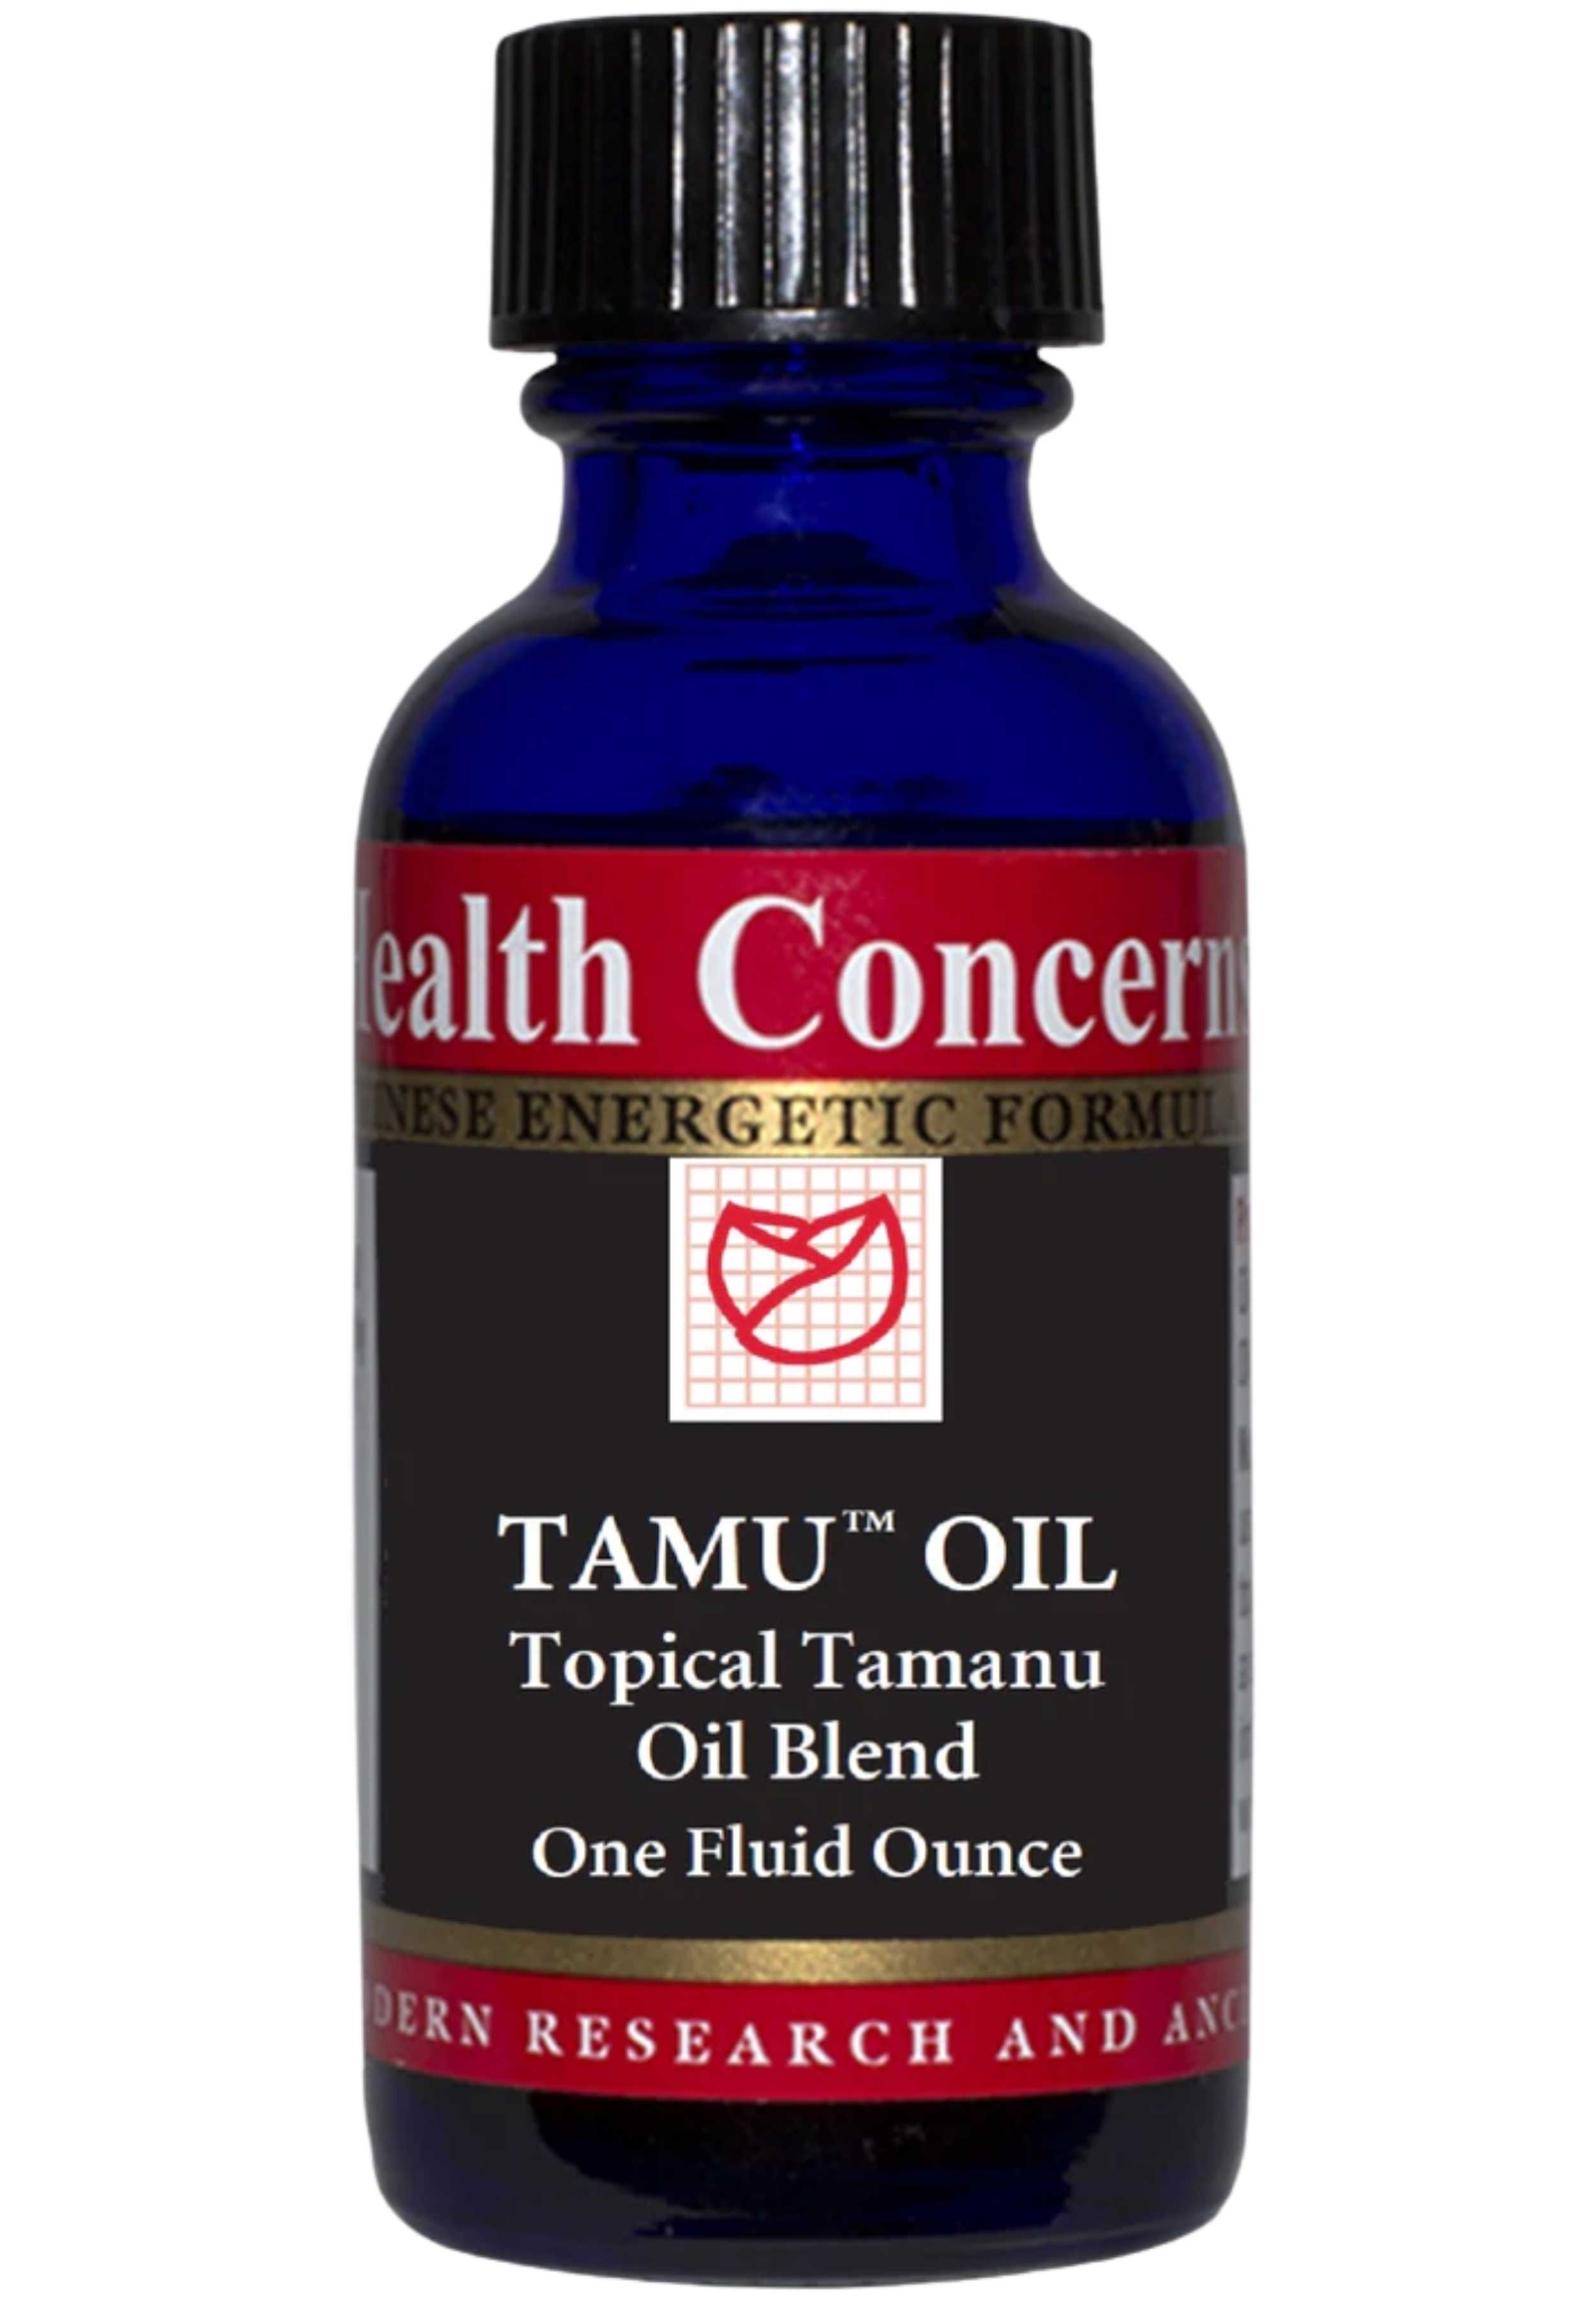 Health Concerns Tamu Oil